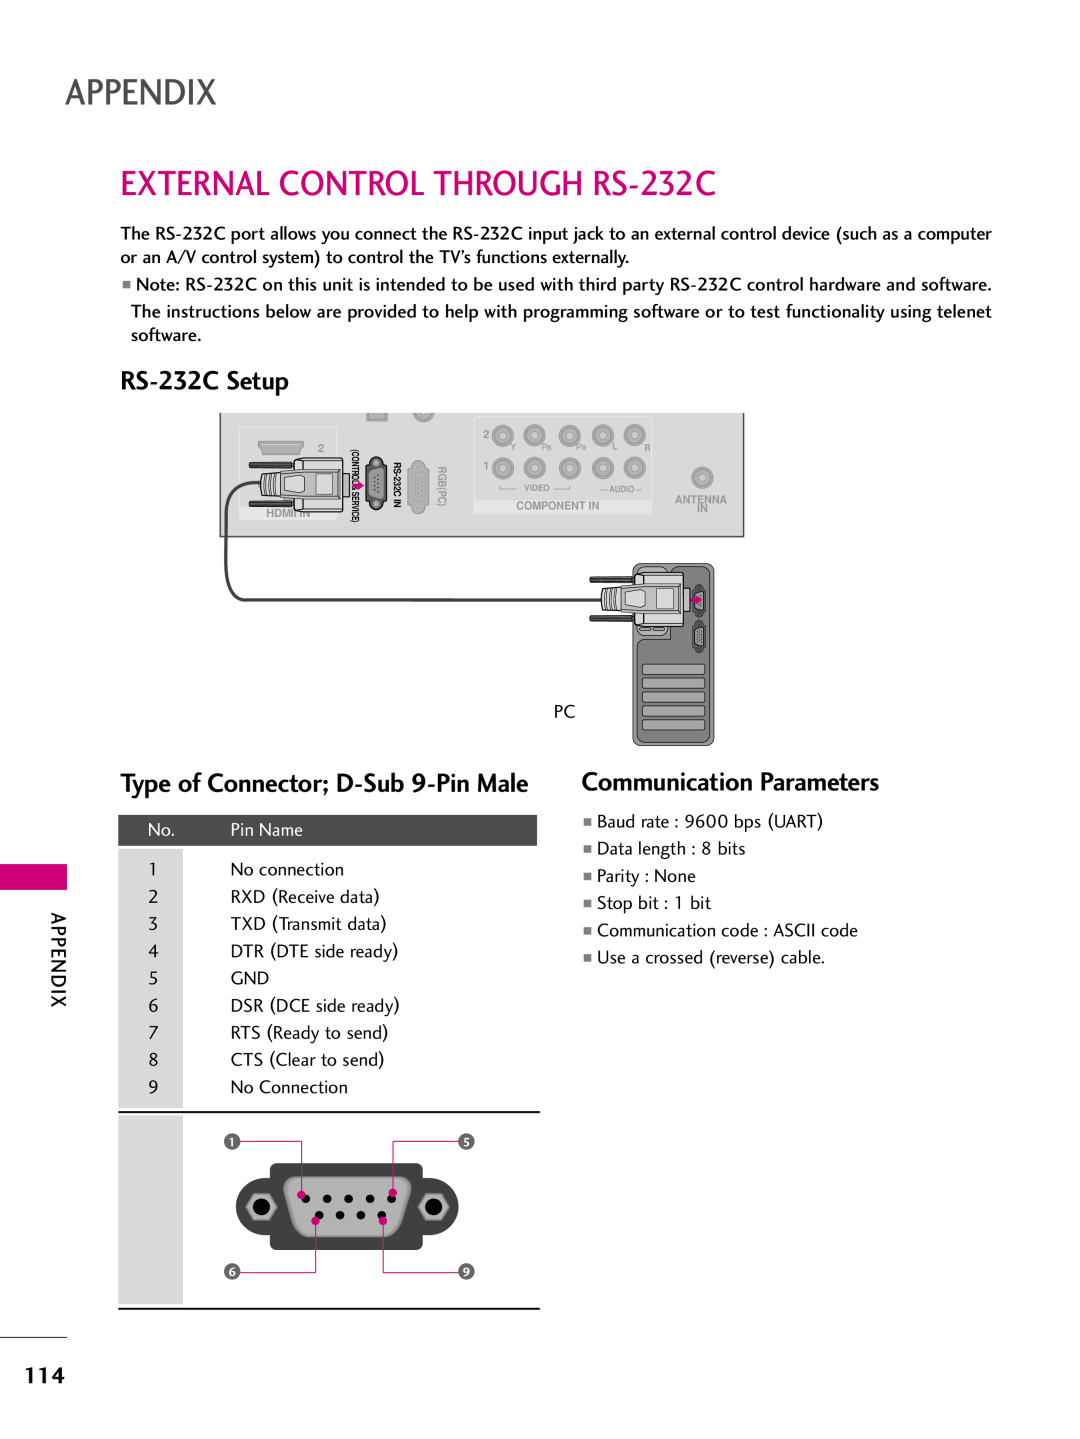 LG Electronics 60PK250 EXTERNAL CONTROL THROUGH RS-232C, RS-232C Setup, Communication Parameters, Pin Name, Appendix 